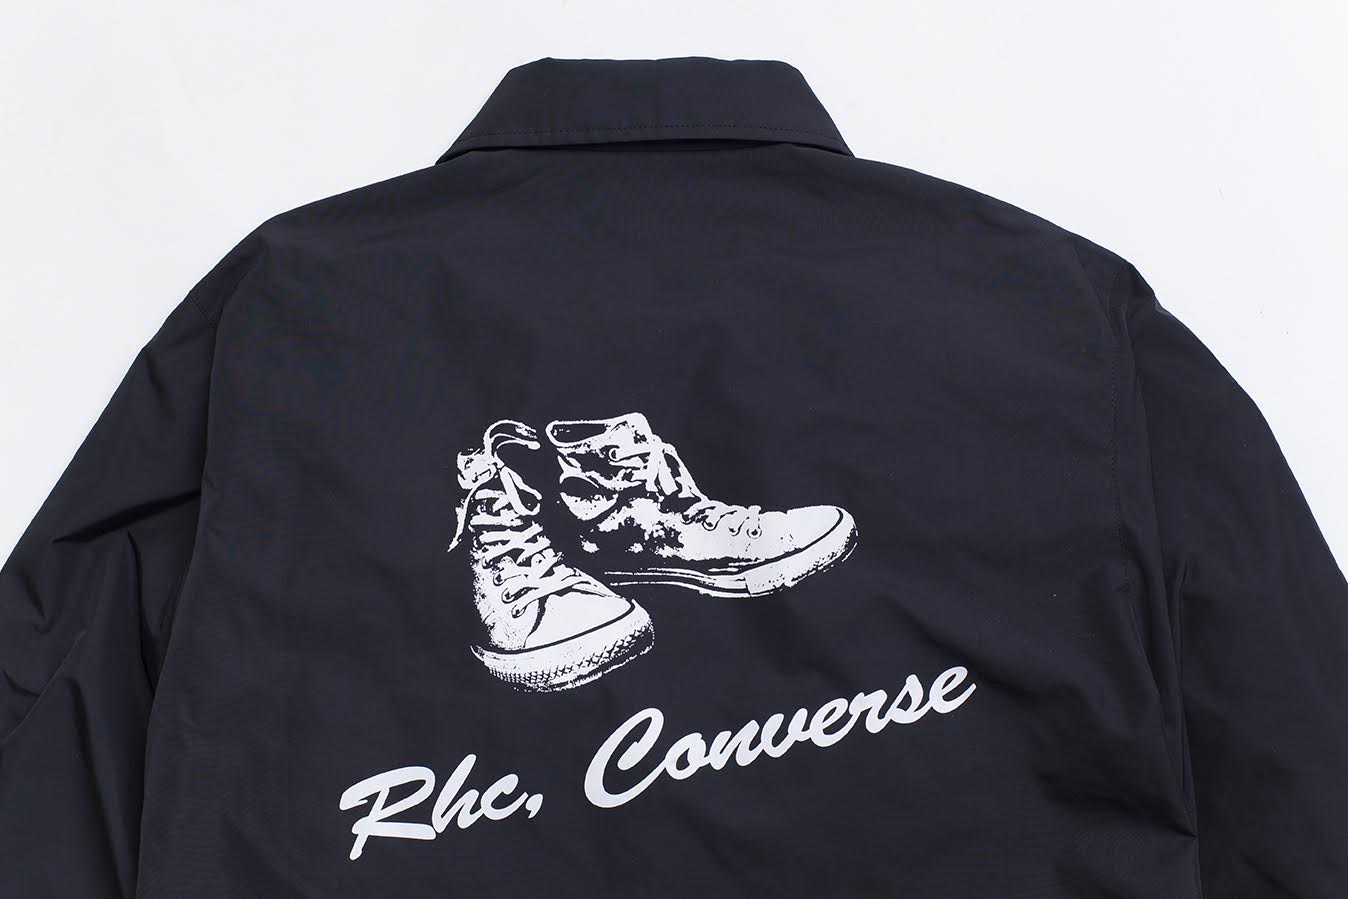 Converse Tokyo for RHC
RHC Osaka Oepn limted item